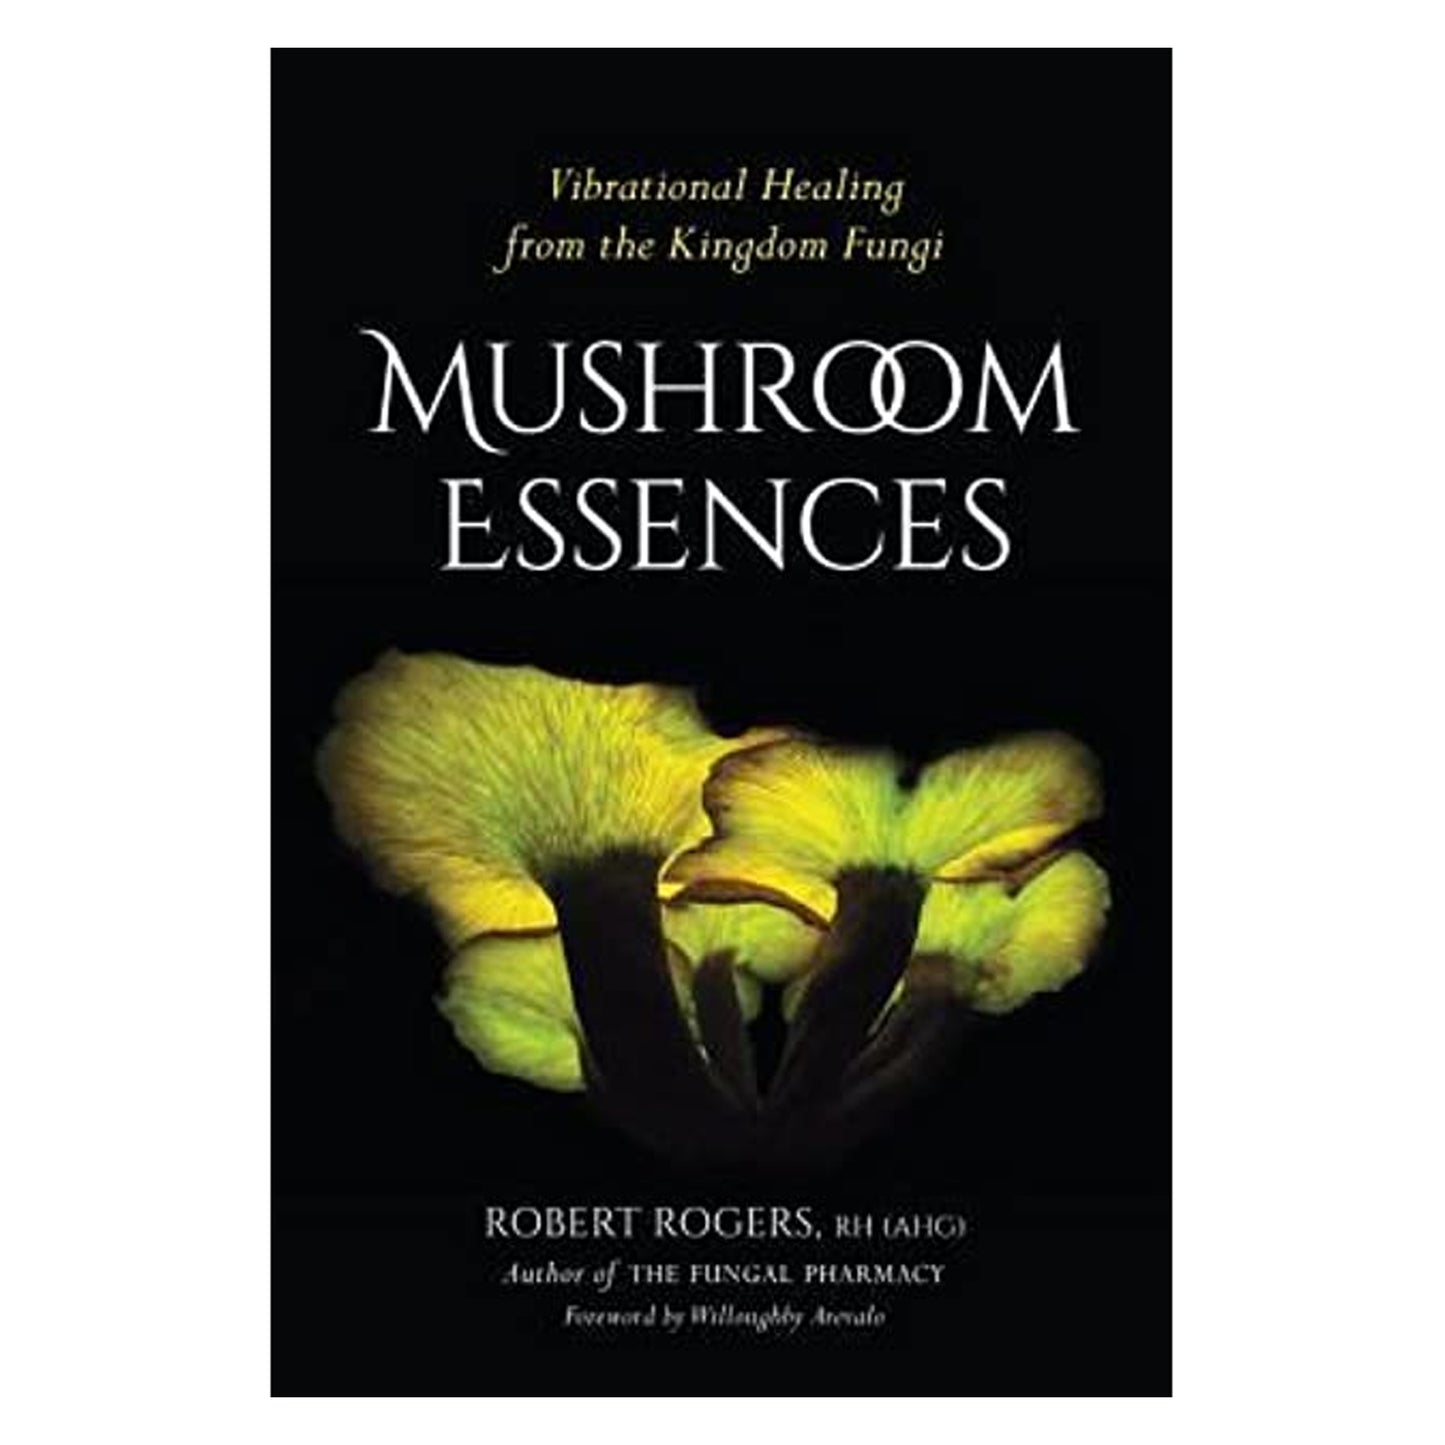 Mushroom Essences by Robert Rogers